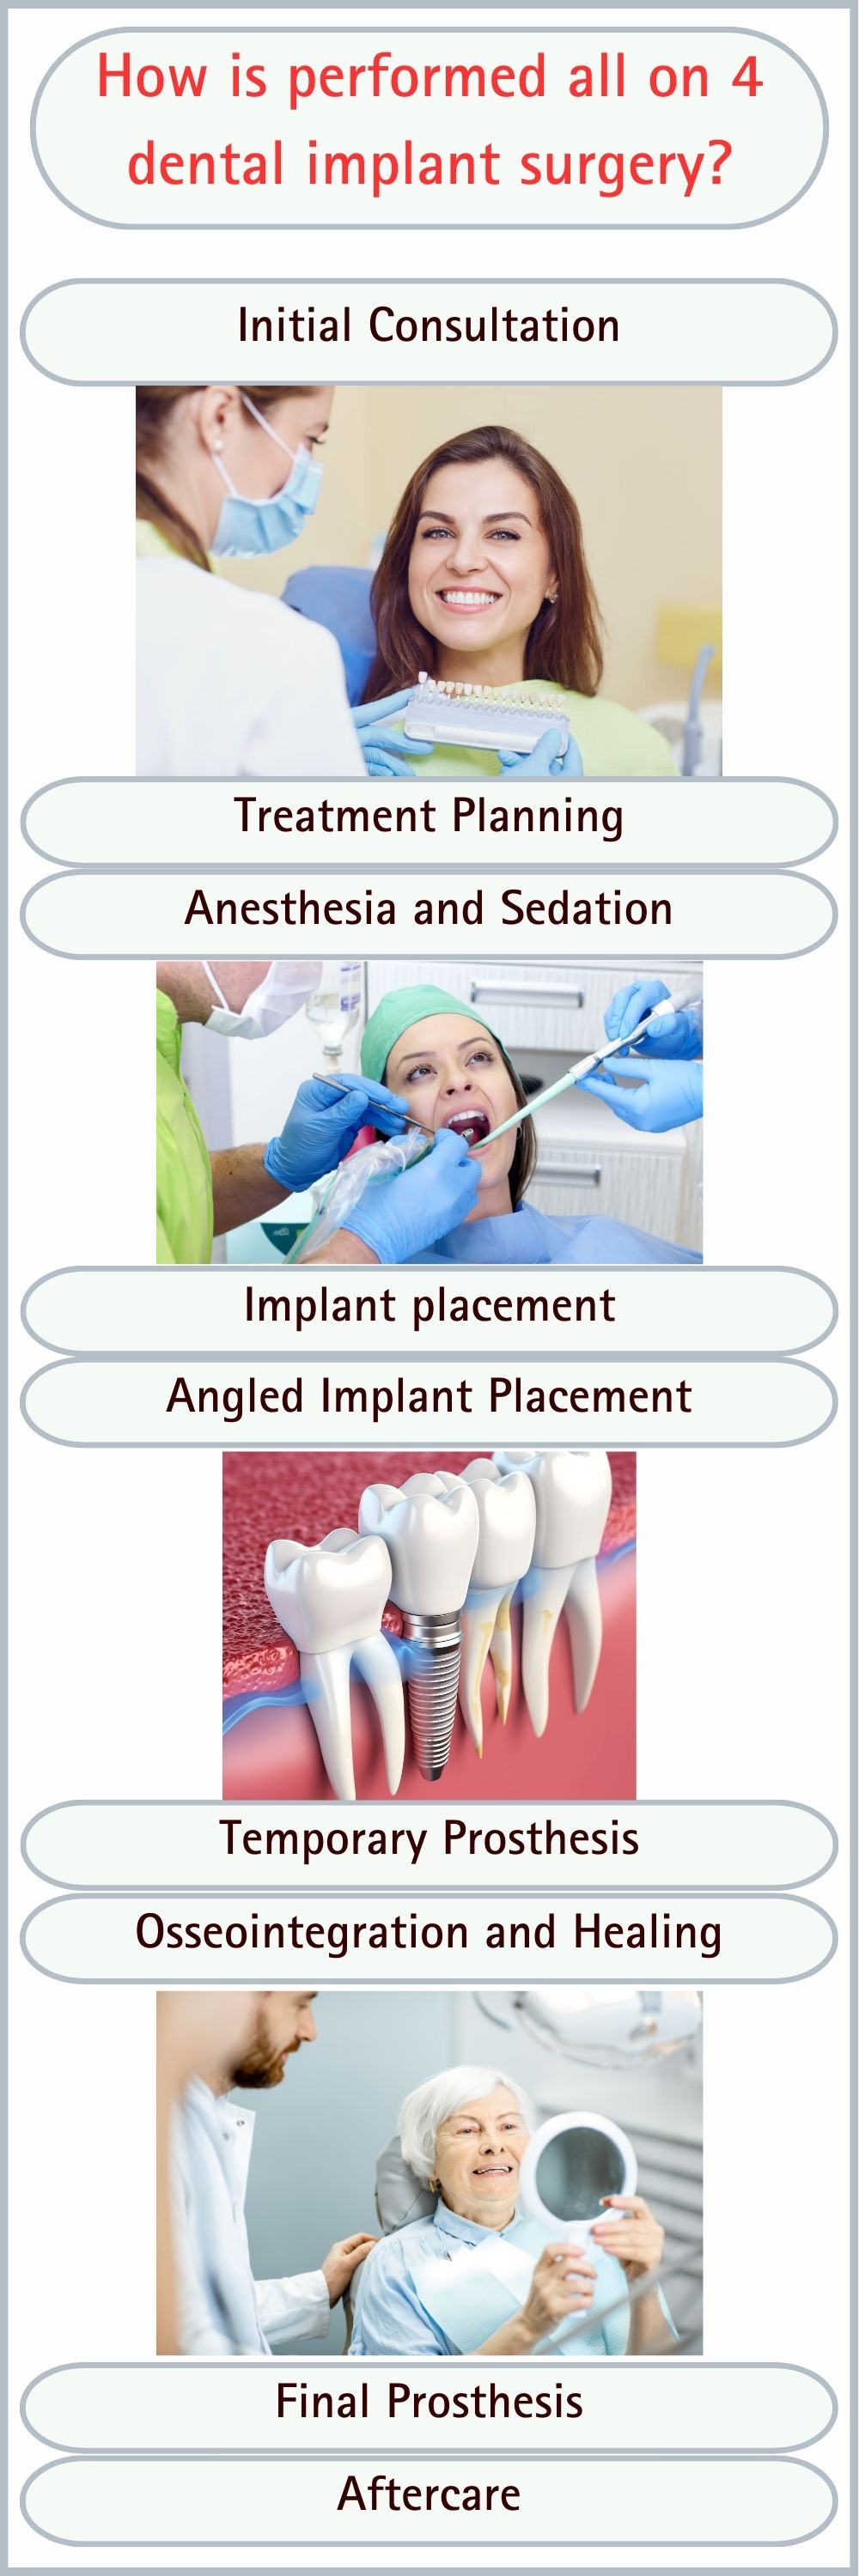 all-on-4 dental implants how is perfomed-turkey-antalya